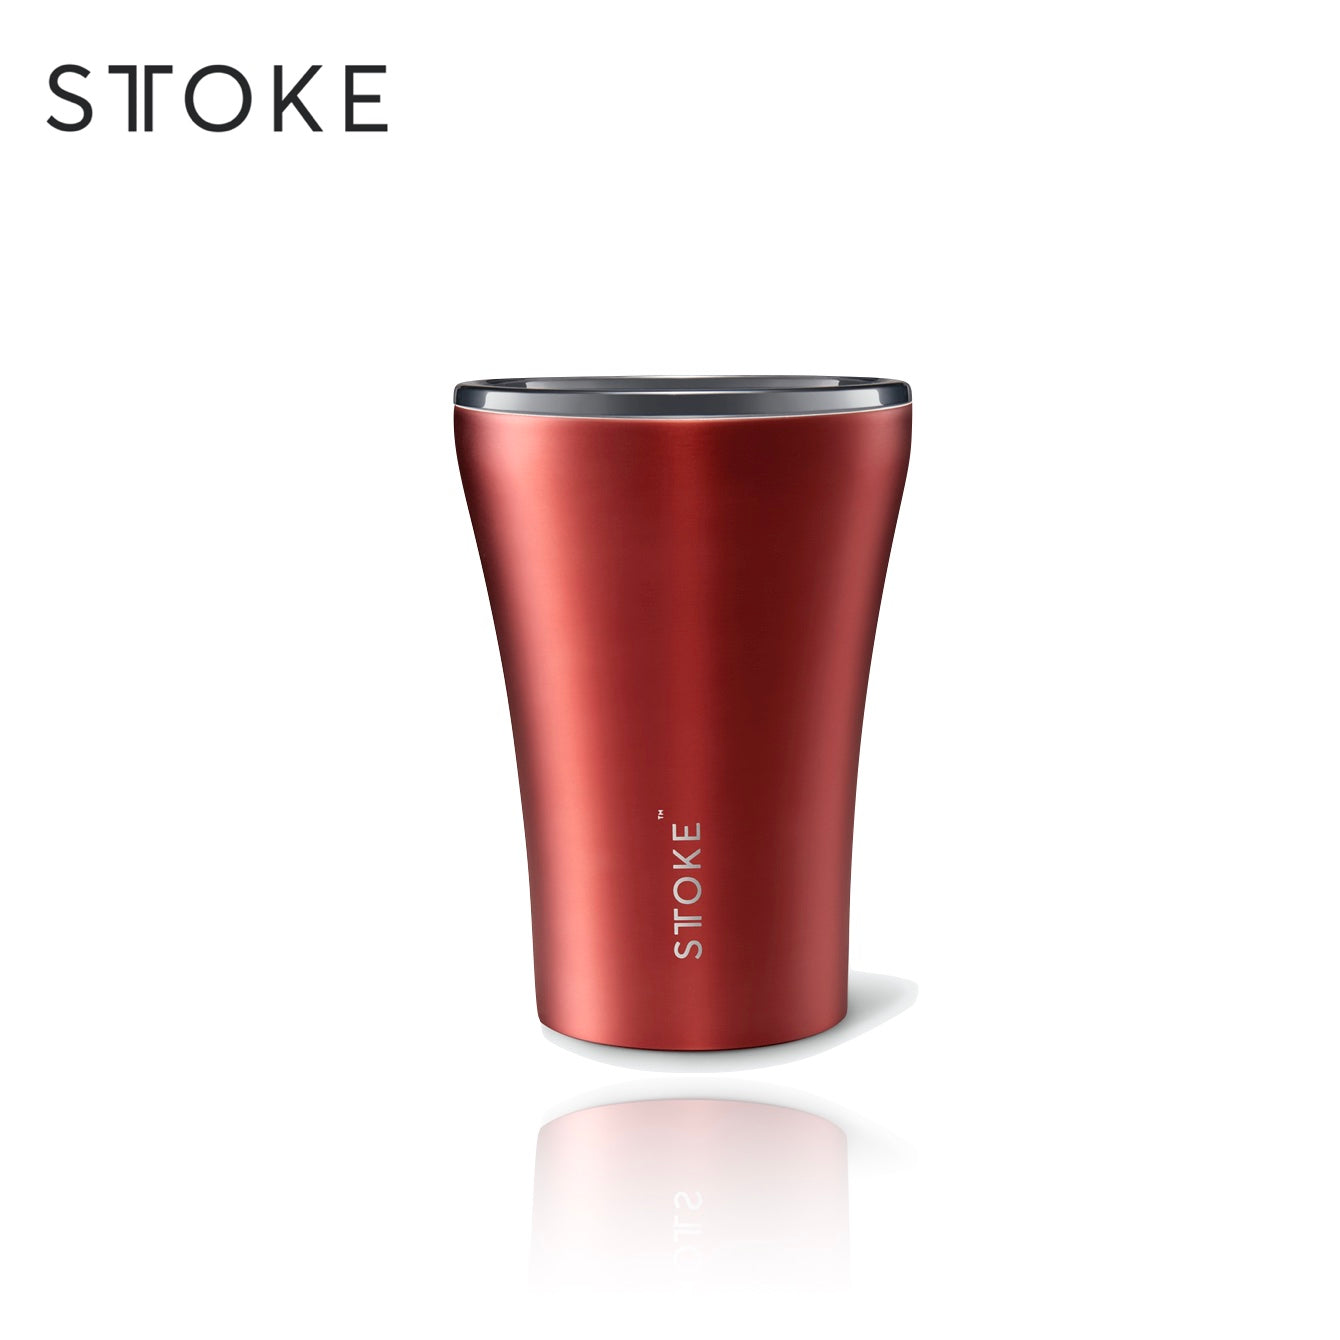 Sttoke Shatterproof Ceramic Cup 8 oz satin red